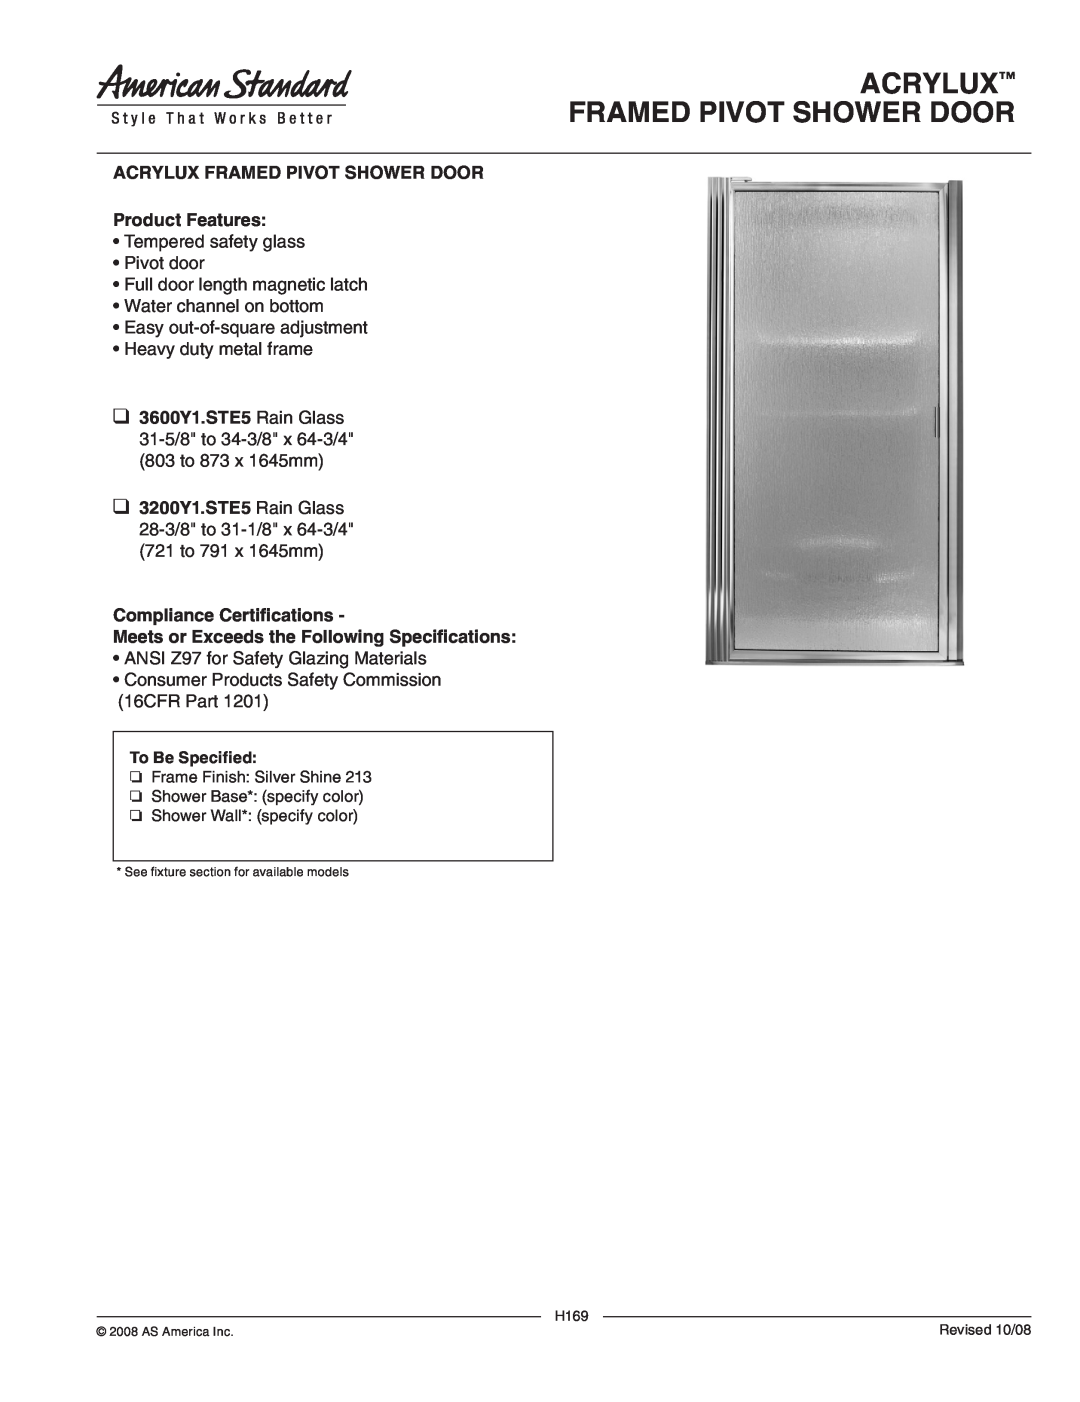 American Standard 3600Y1.STE5, 3200Y1.STE5 manual Acrylux Framed Pivot Shower Door 